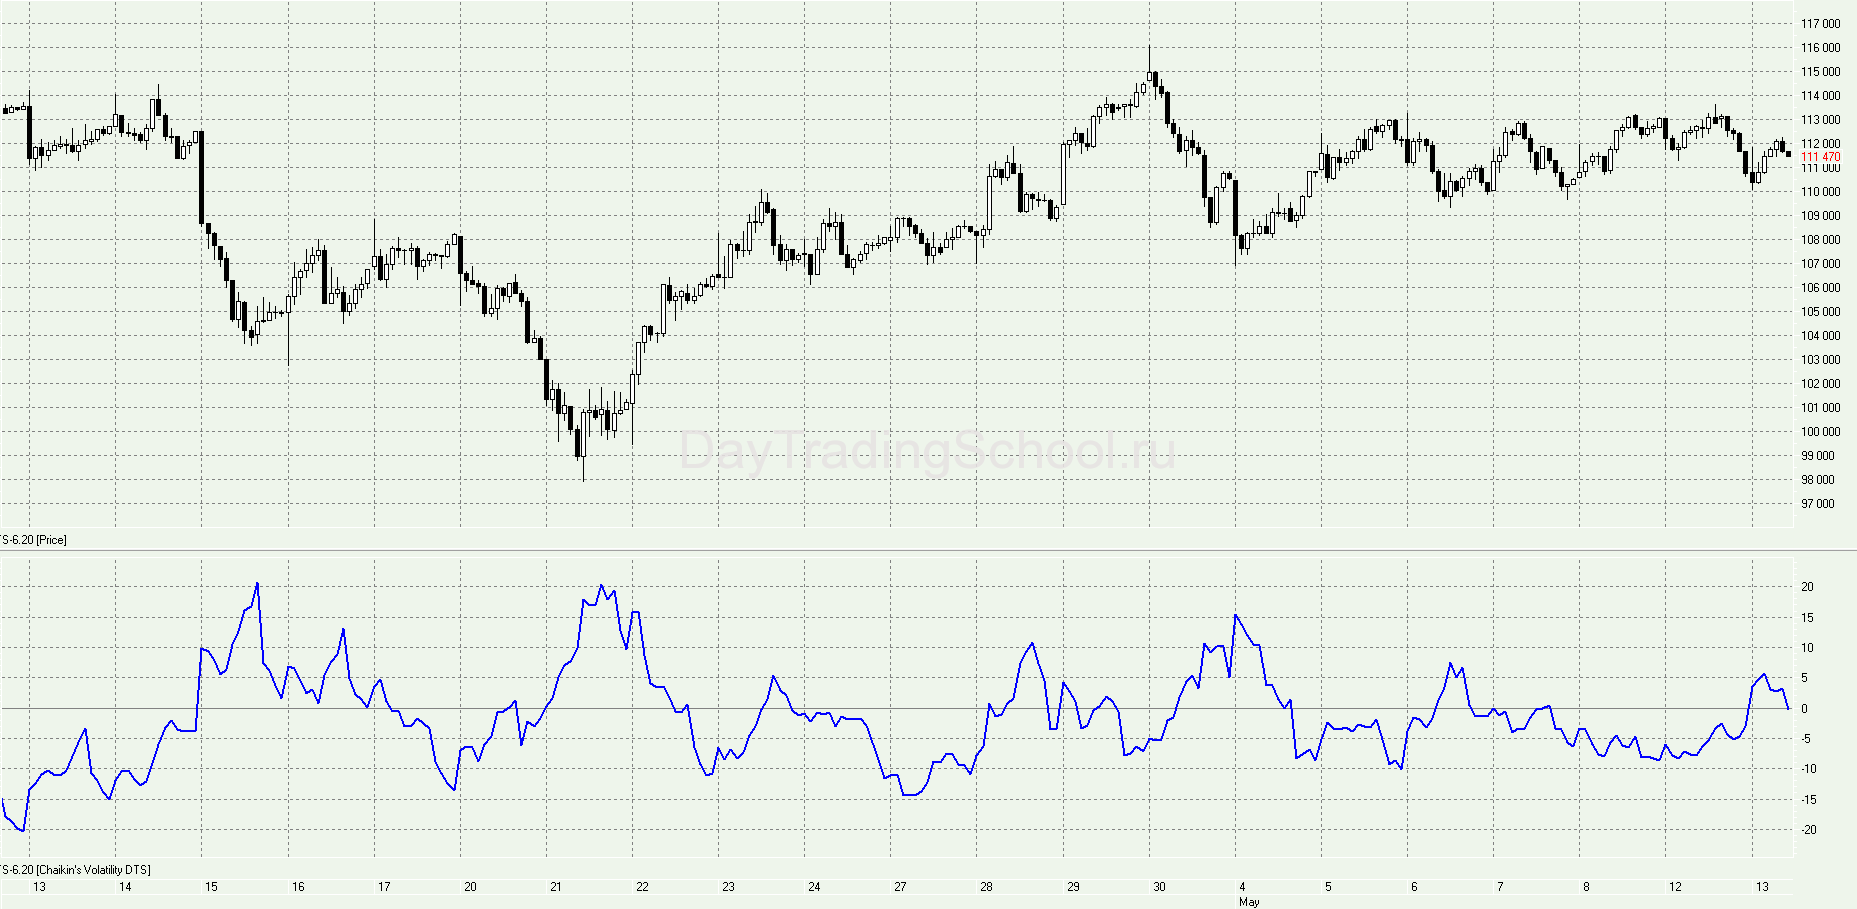 Chaikins-Volatility-график